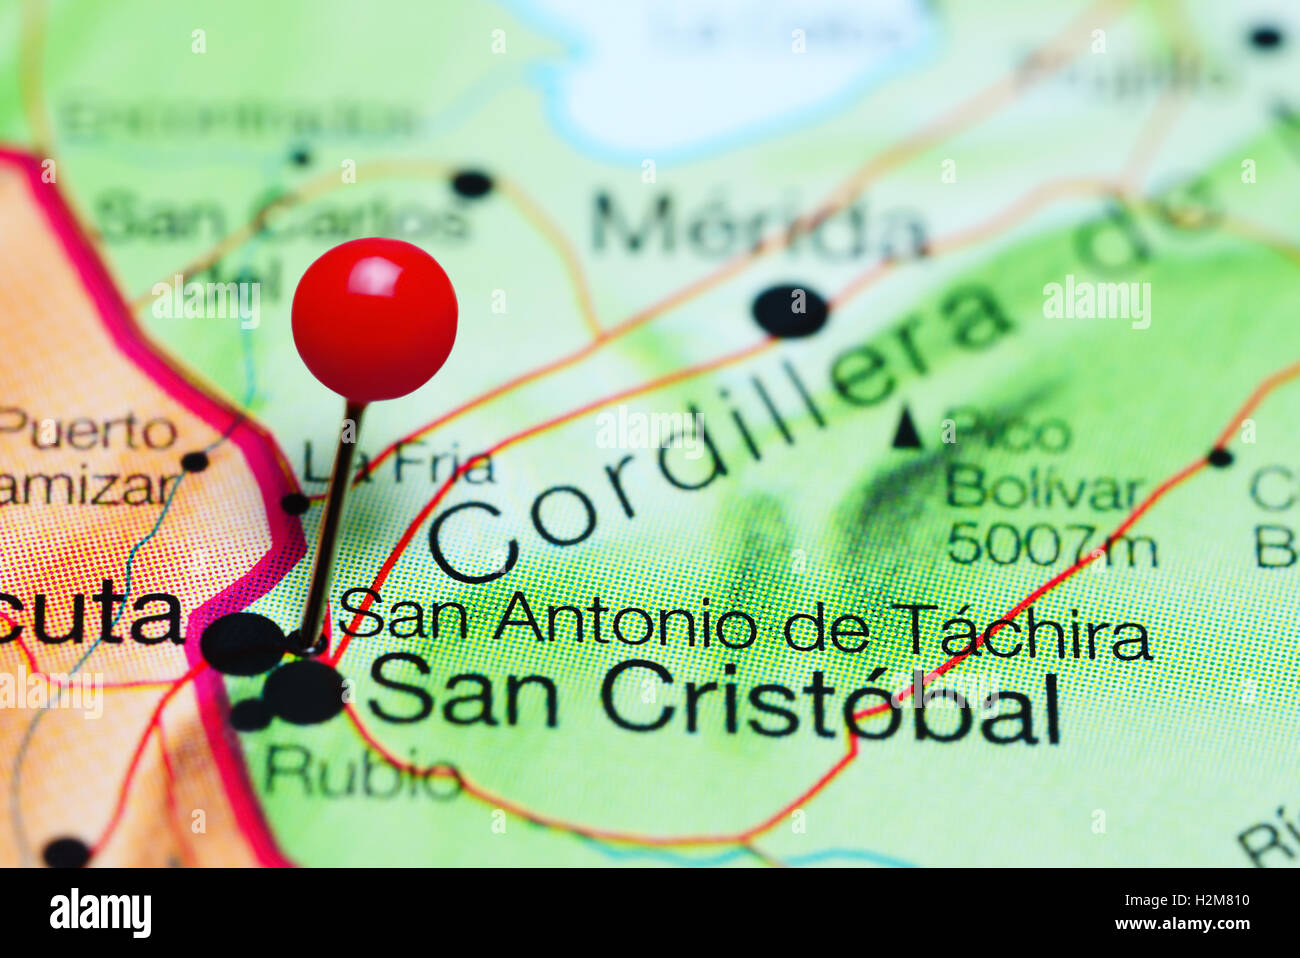 San Antonio de Tachira pinned on a map of Venezuela Stock Photo